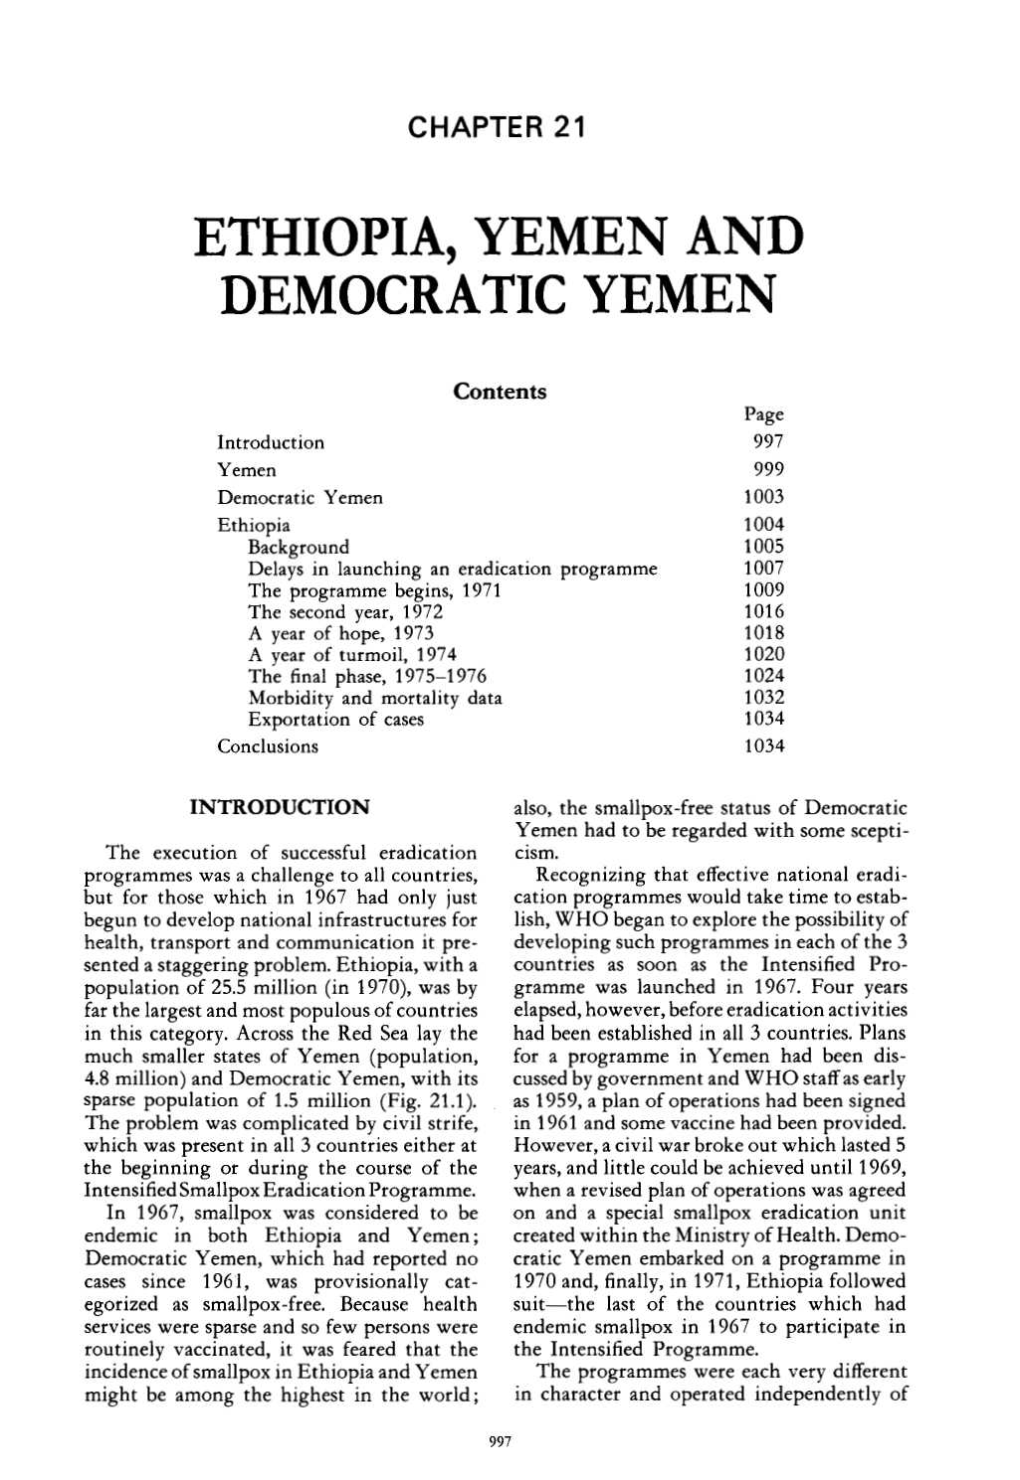 Chapter 21. Ethiopia, Yemen and Democratic Yemen P997